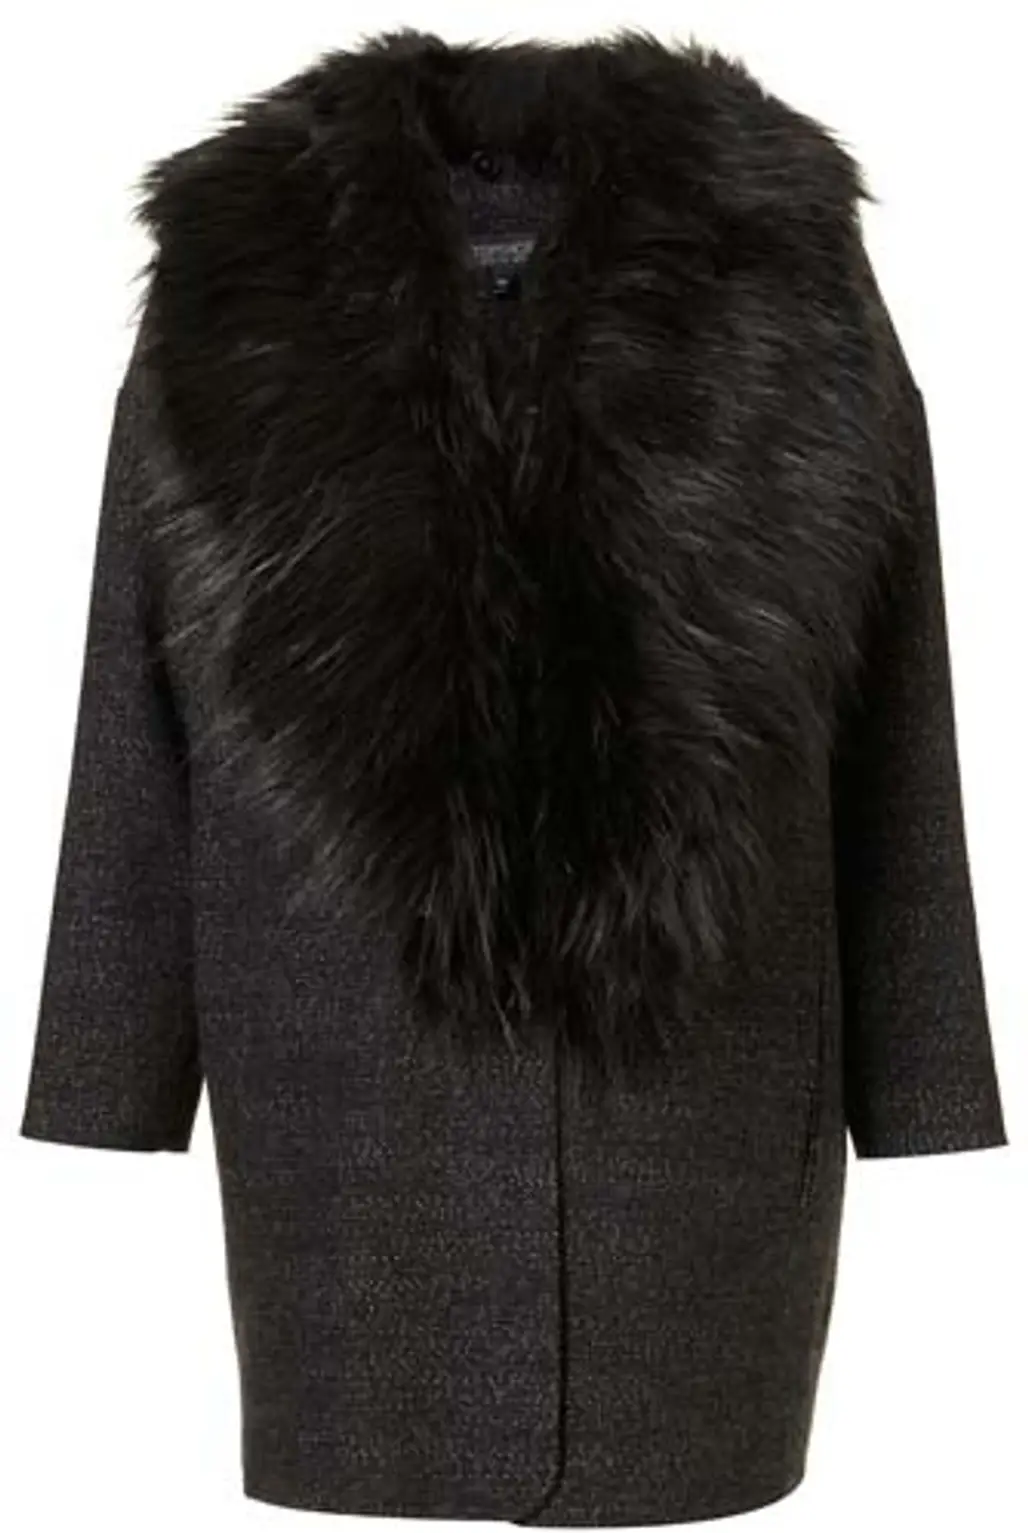 Topshop Tweed Faux Fur Collar Boyfriend Coat